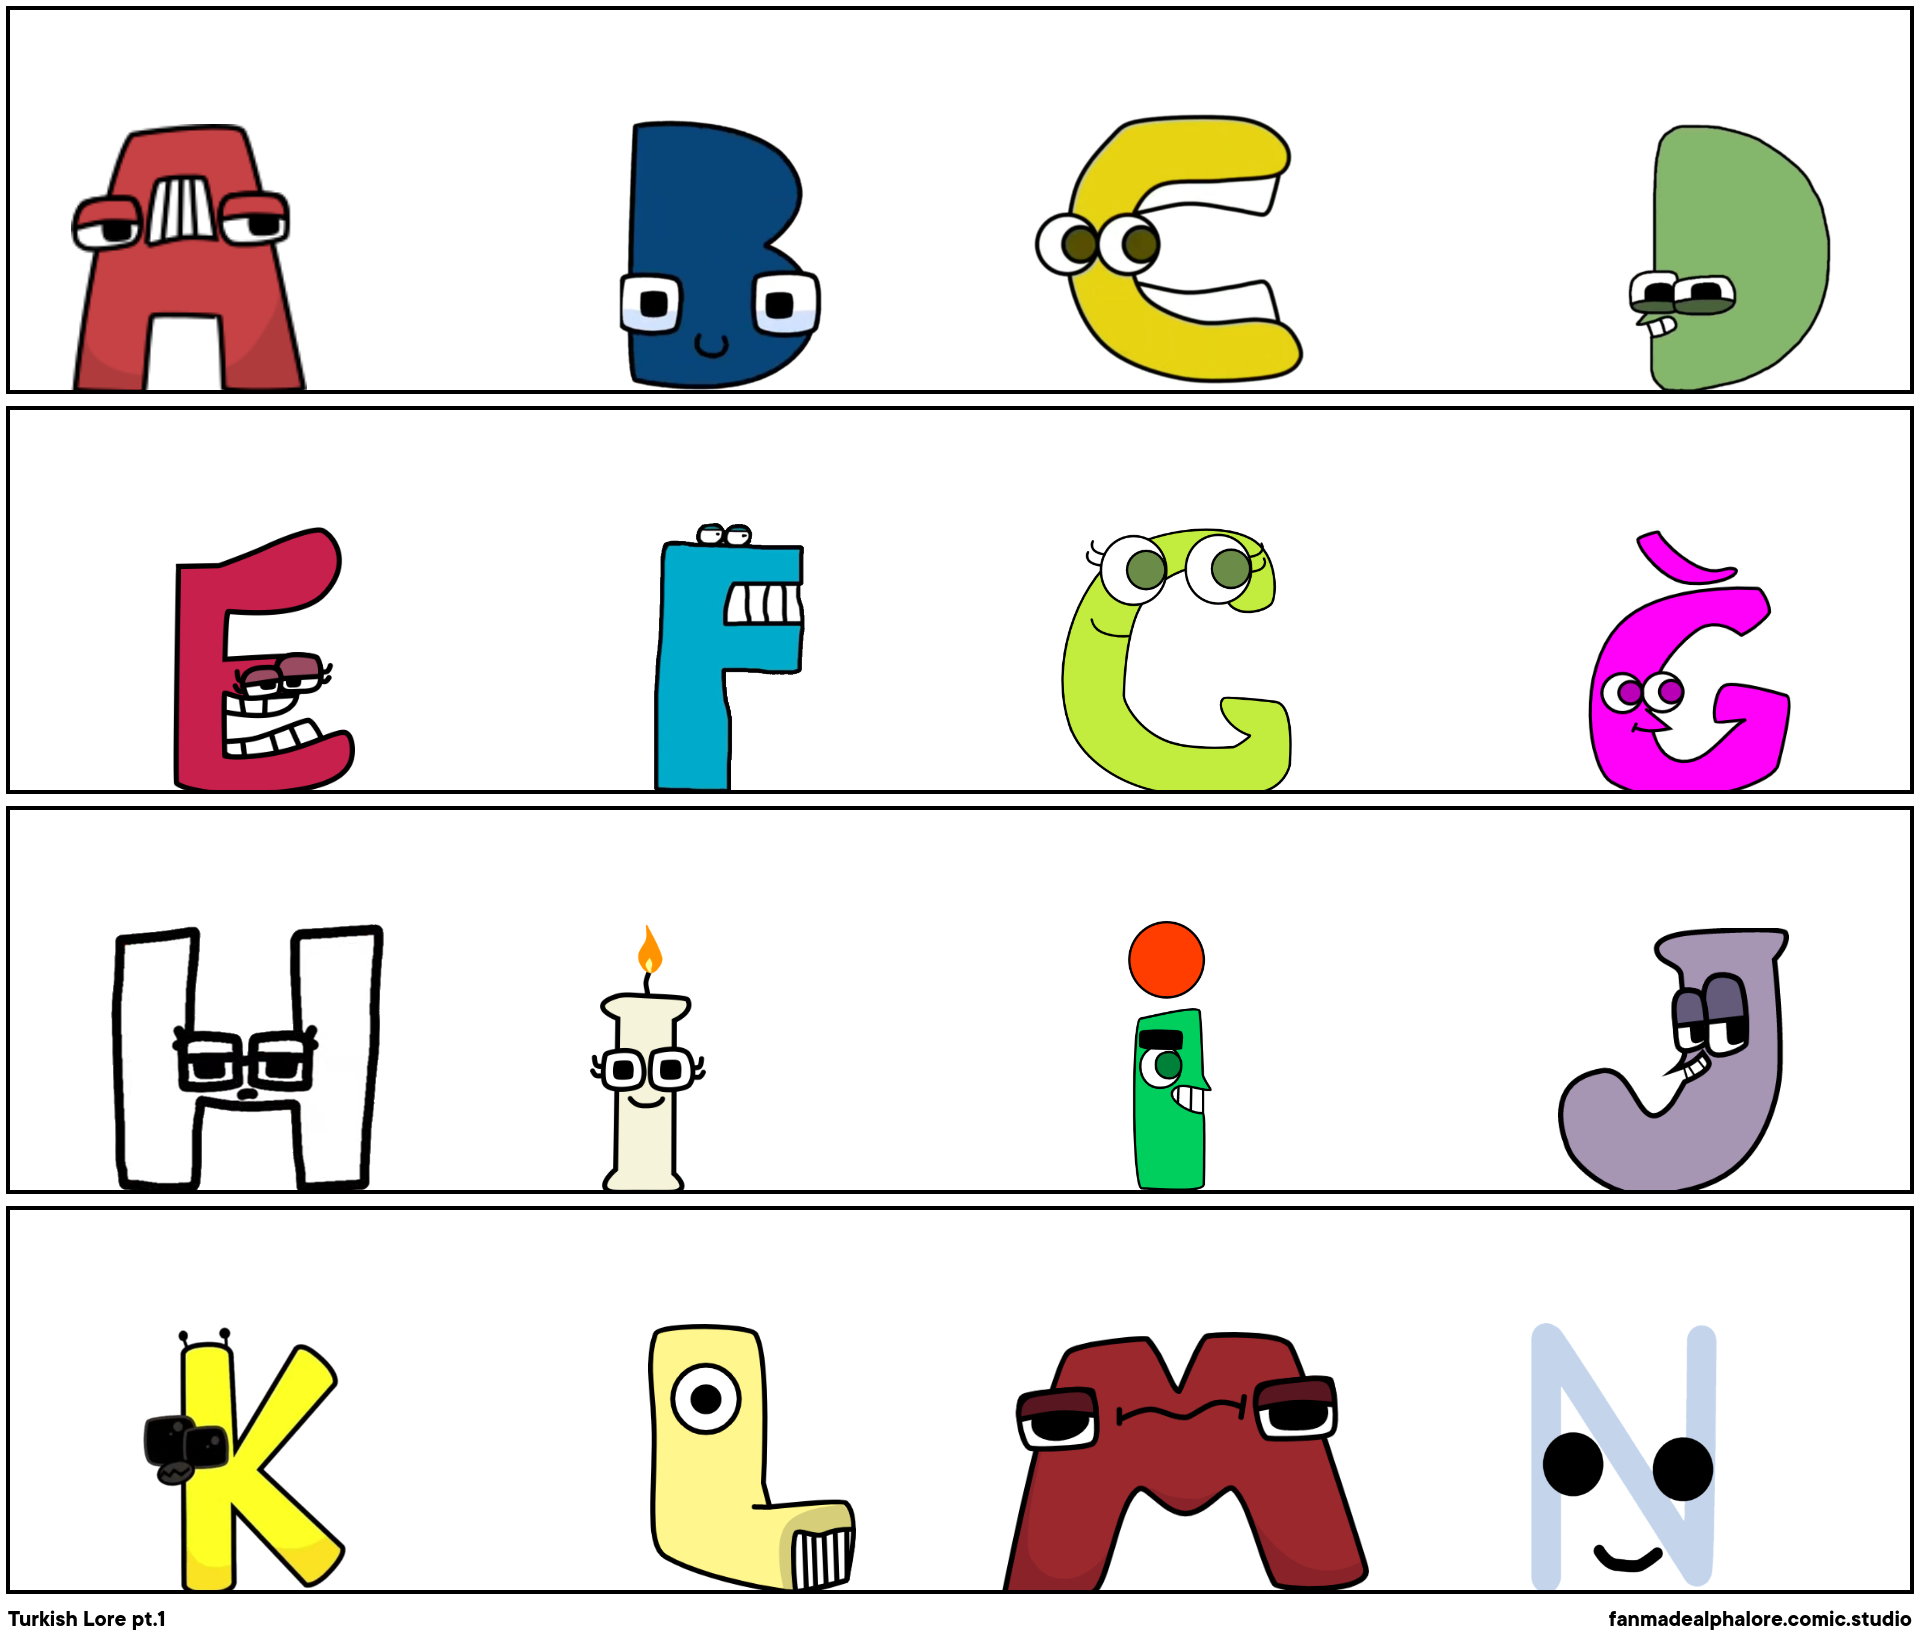 Harrymations Kazakhstan alphabet lore (I hate DEH) - Comic Studio